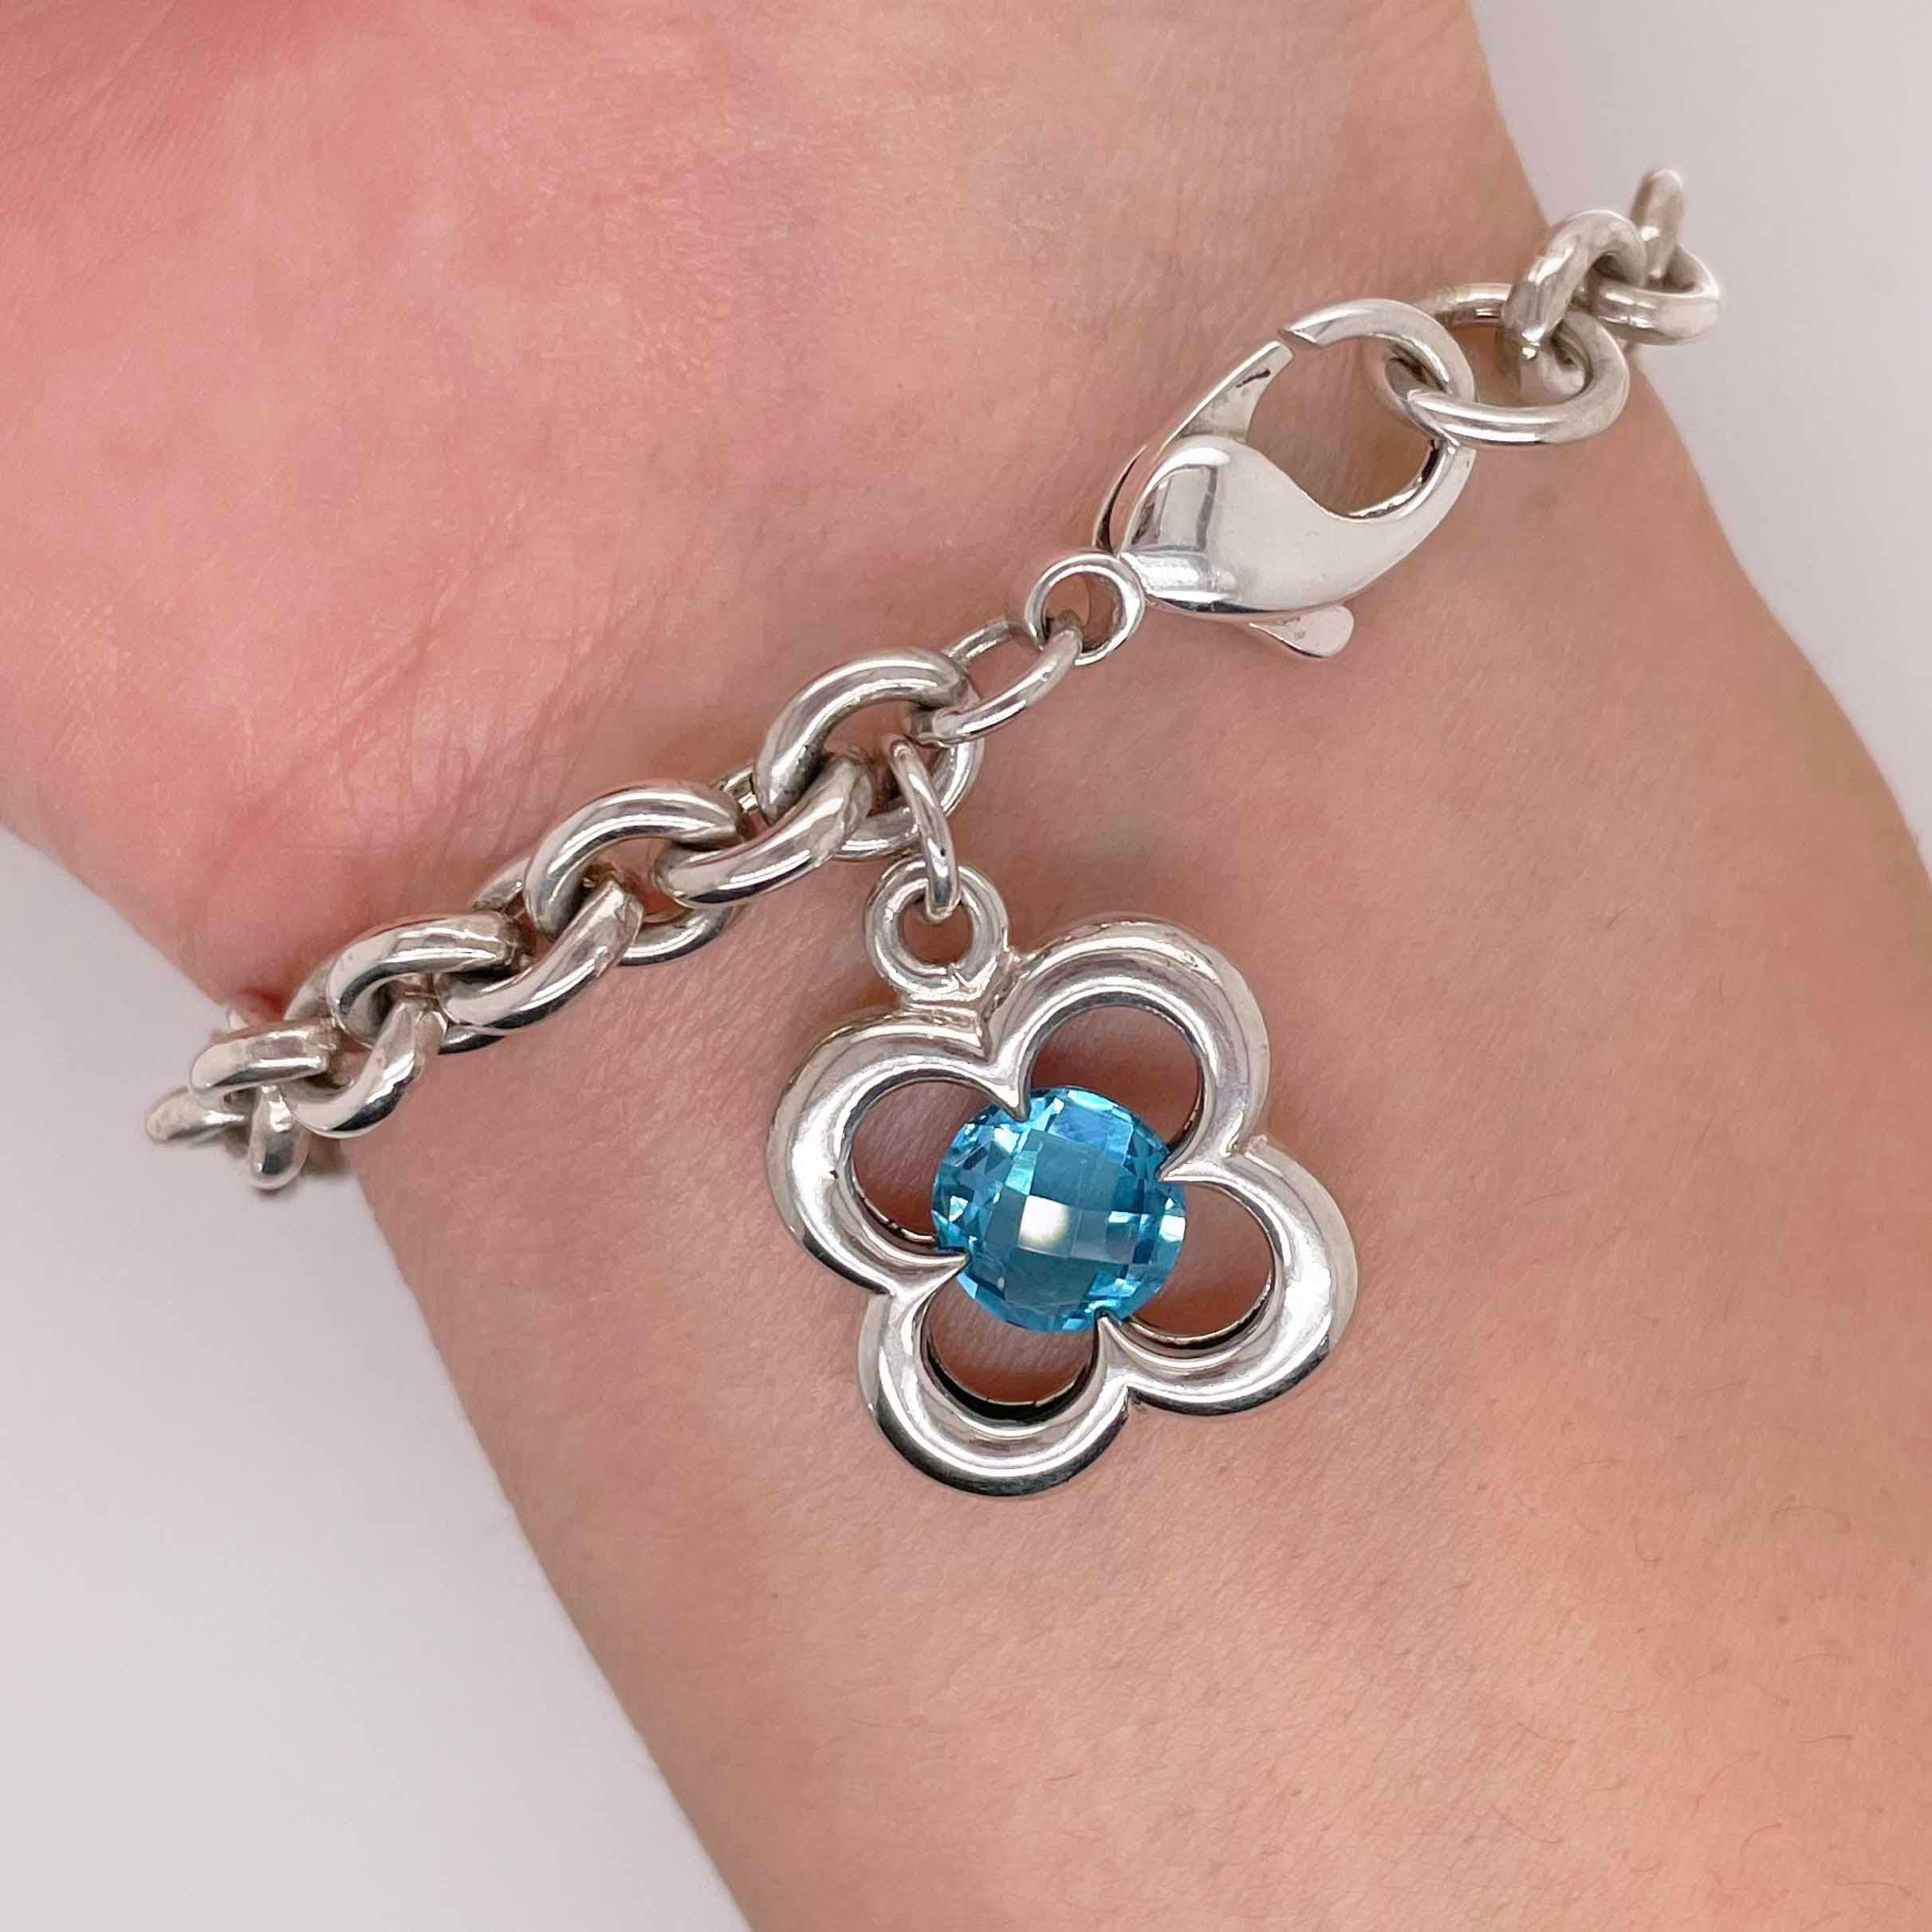 Contemporary Heidi Klum Authentic Blue Topaz Flower Charm Bracelet, Sterling Silver Rare